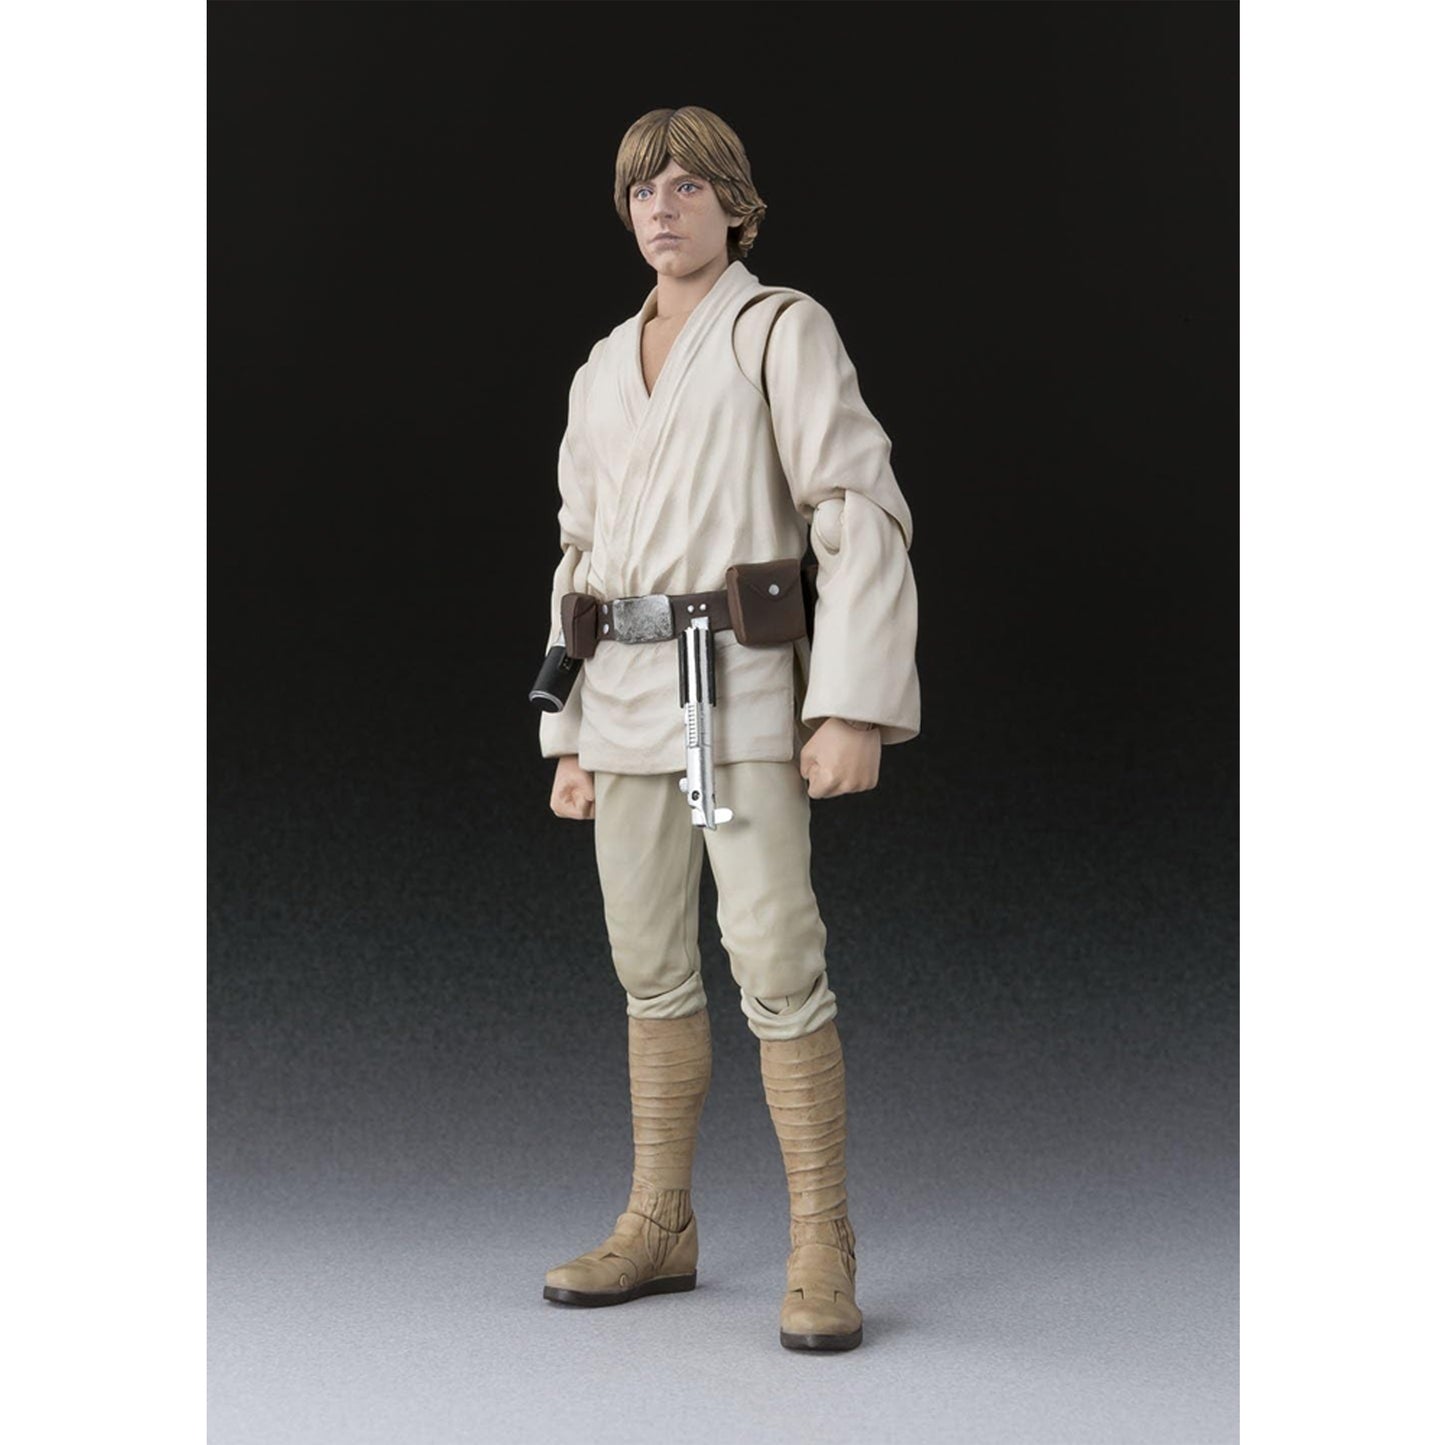 S.H Figuarts Luke Skywalker (New Hope)